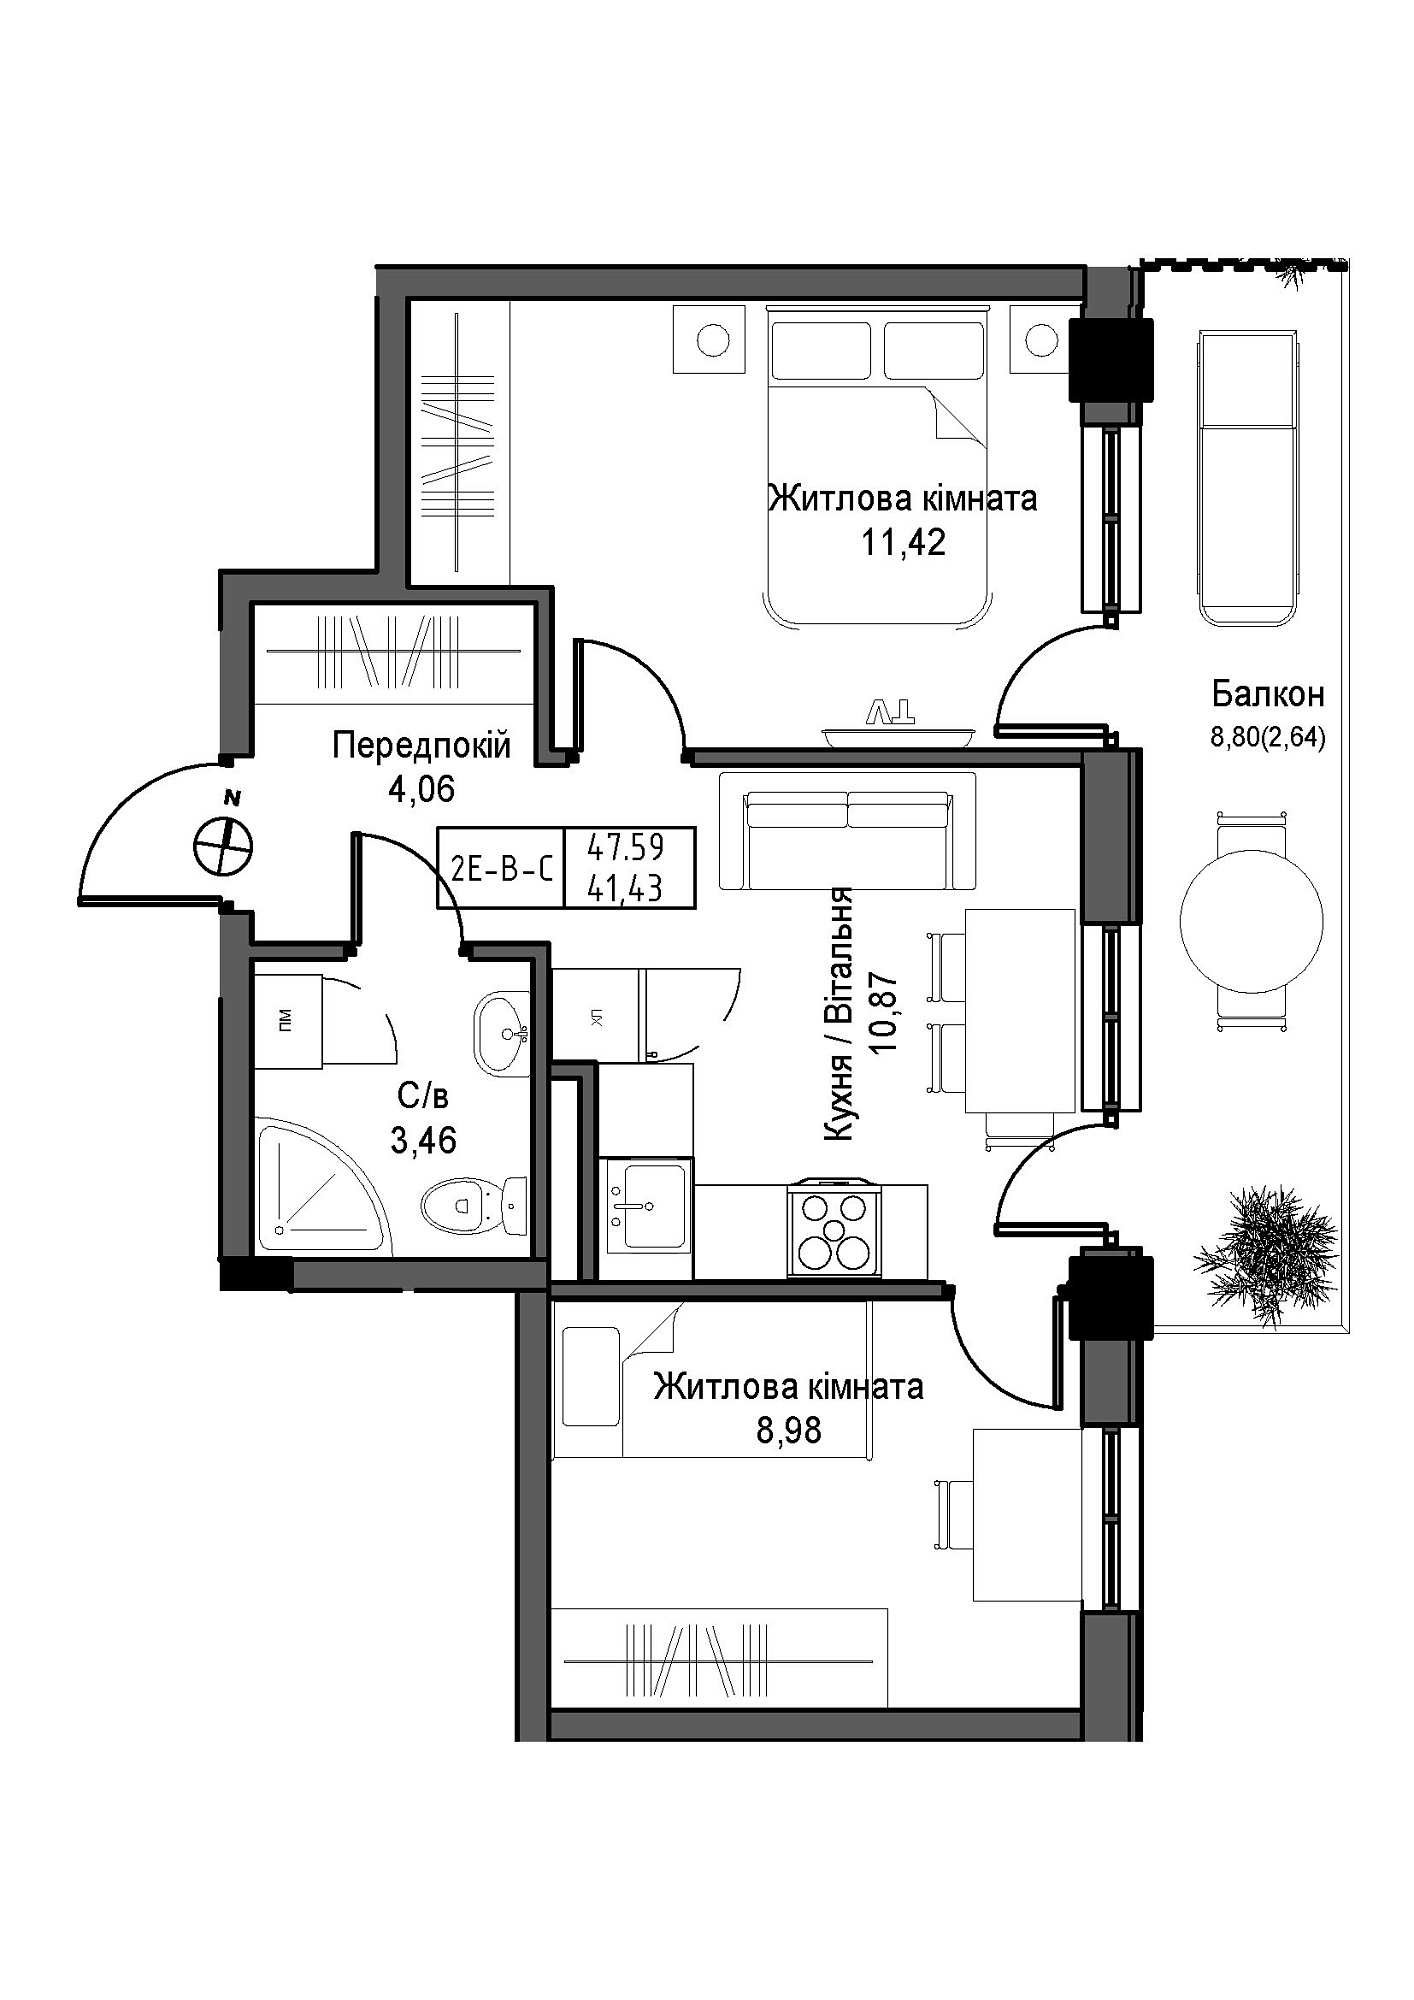 Планування 2-к квартира площею 41.43м2, UM-007-10/0007.